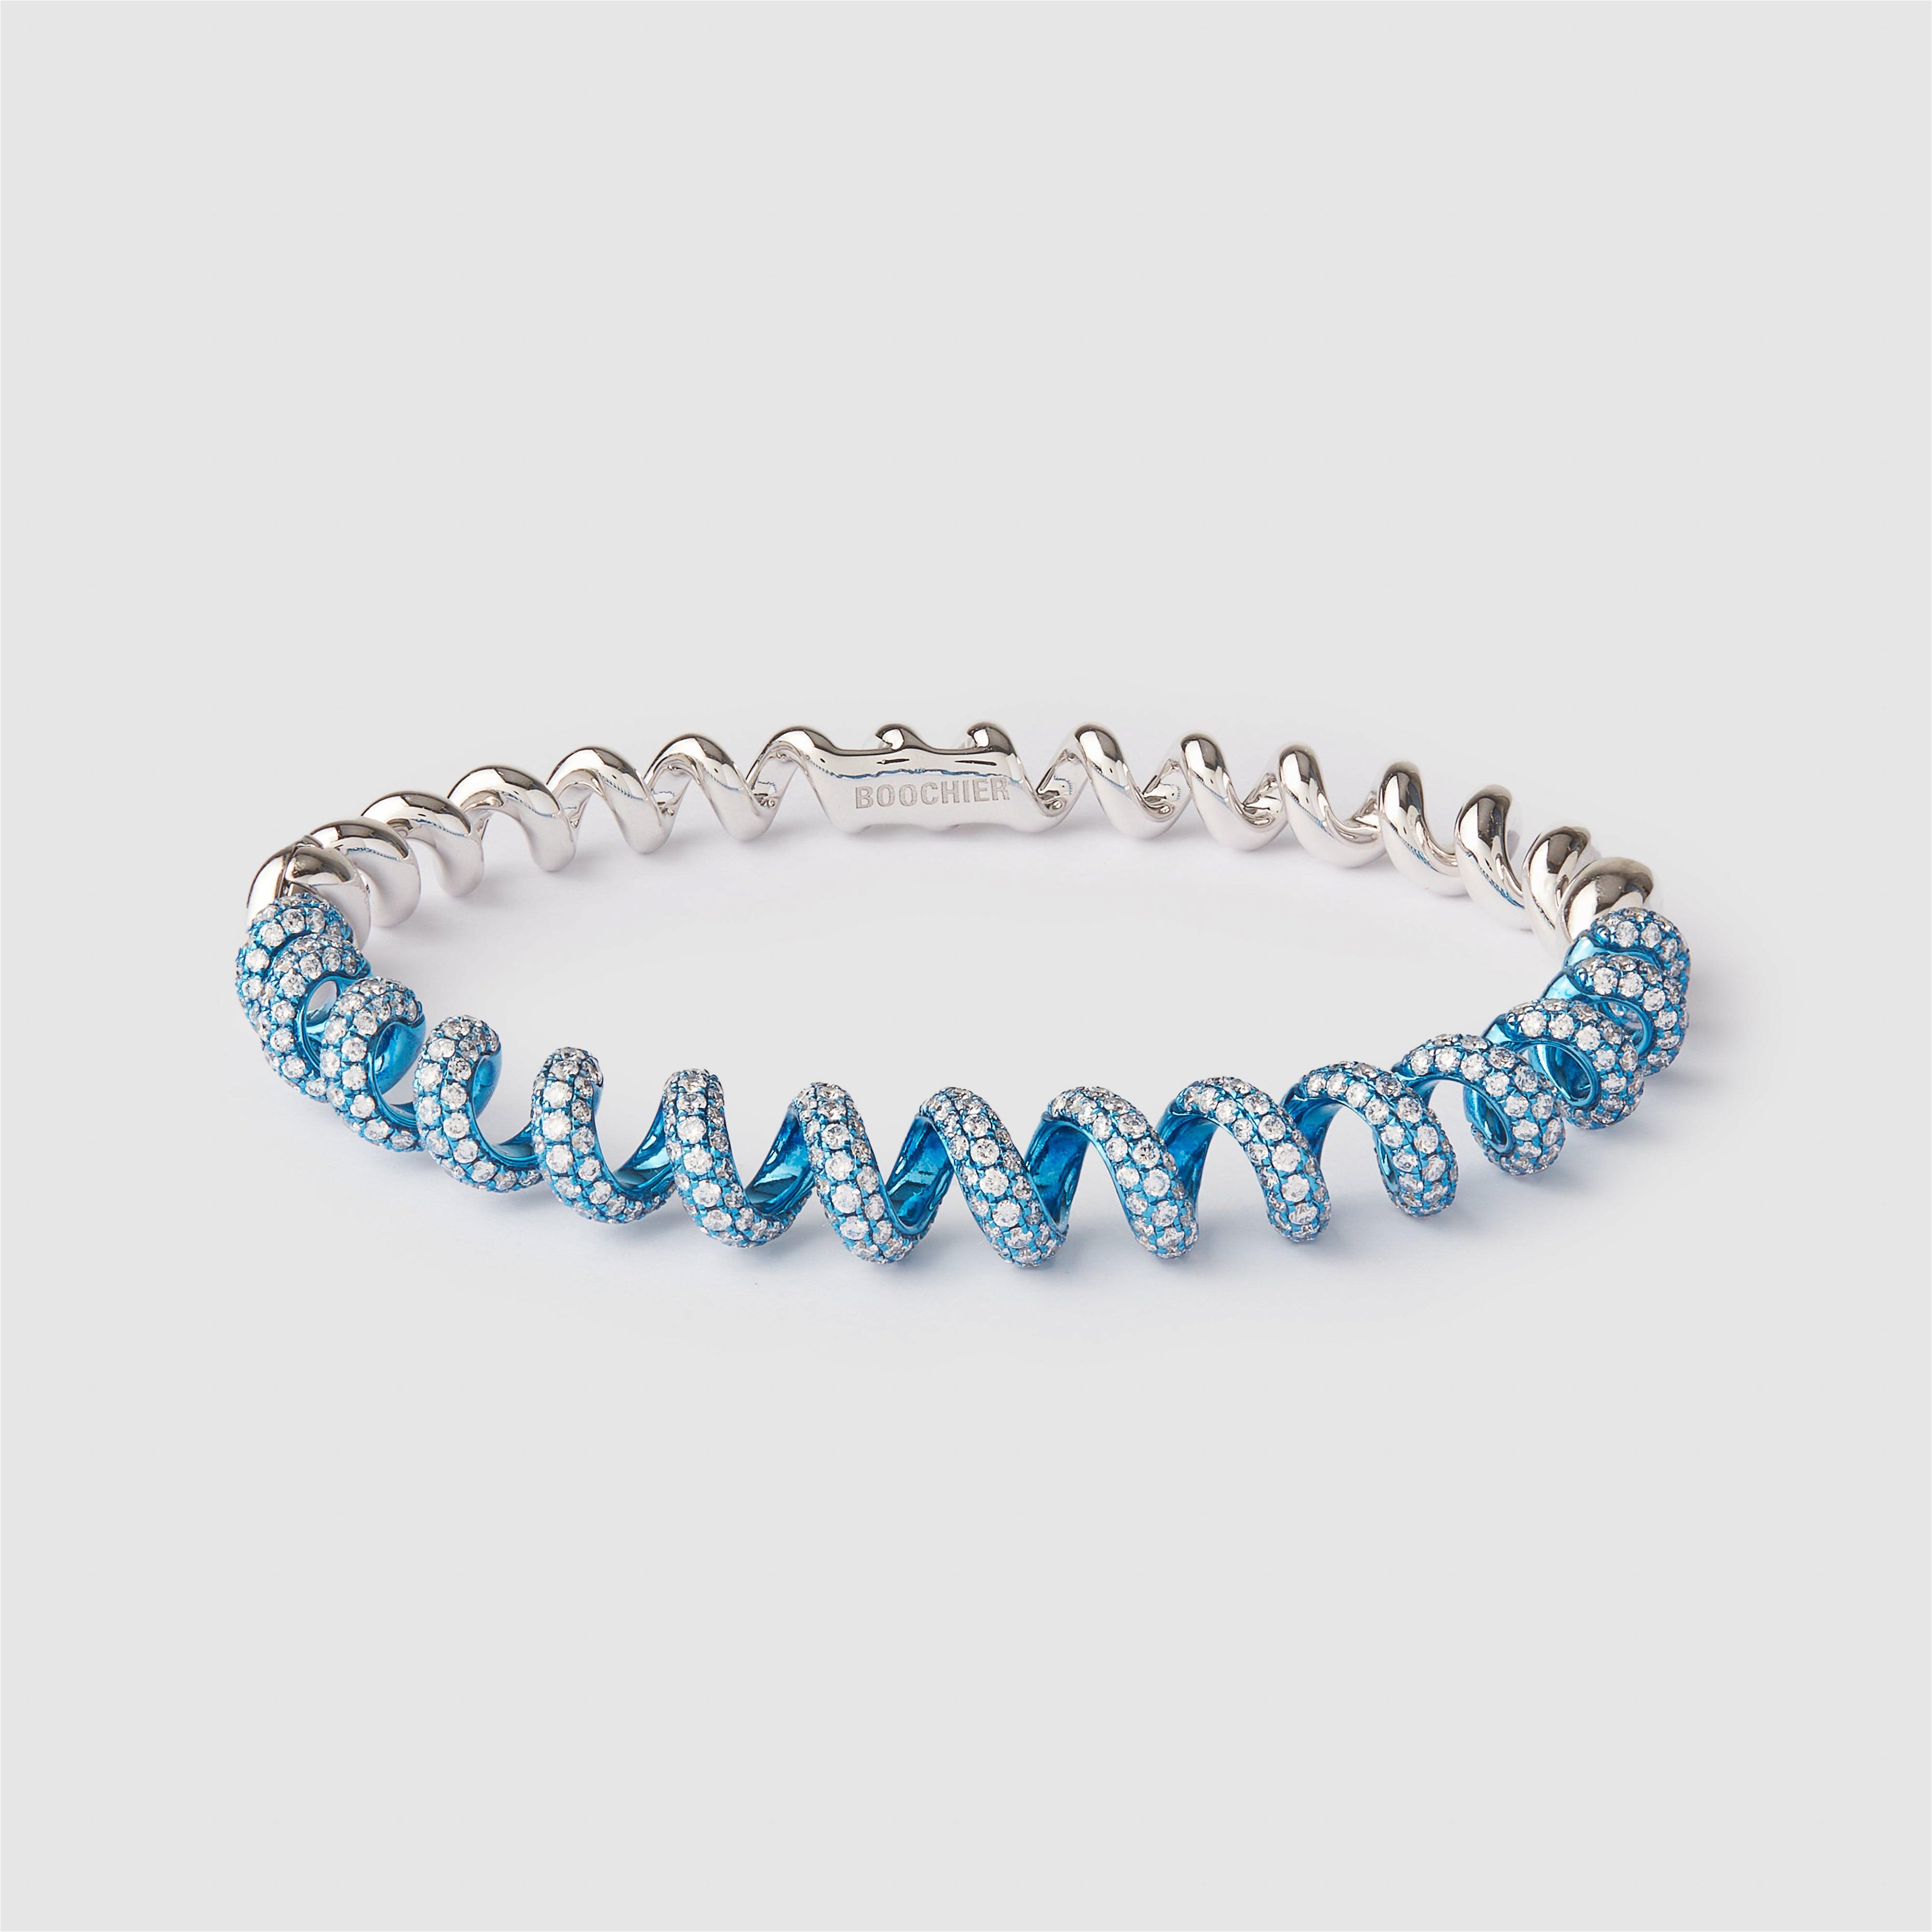 Boochier - Blue Diamond Slinkee Bangle by BOOCHIER